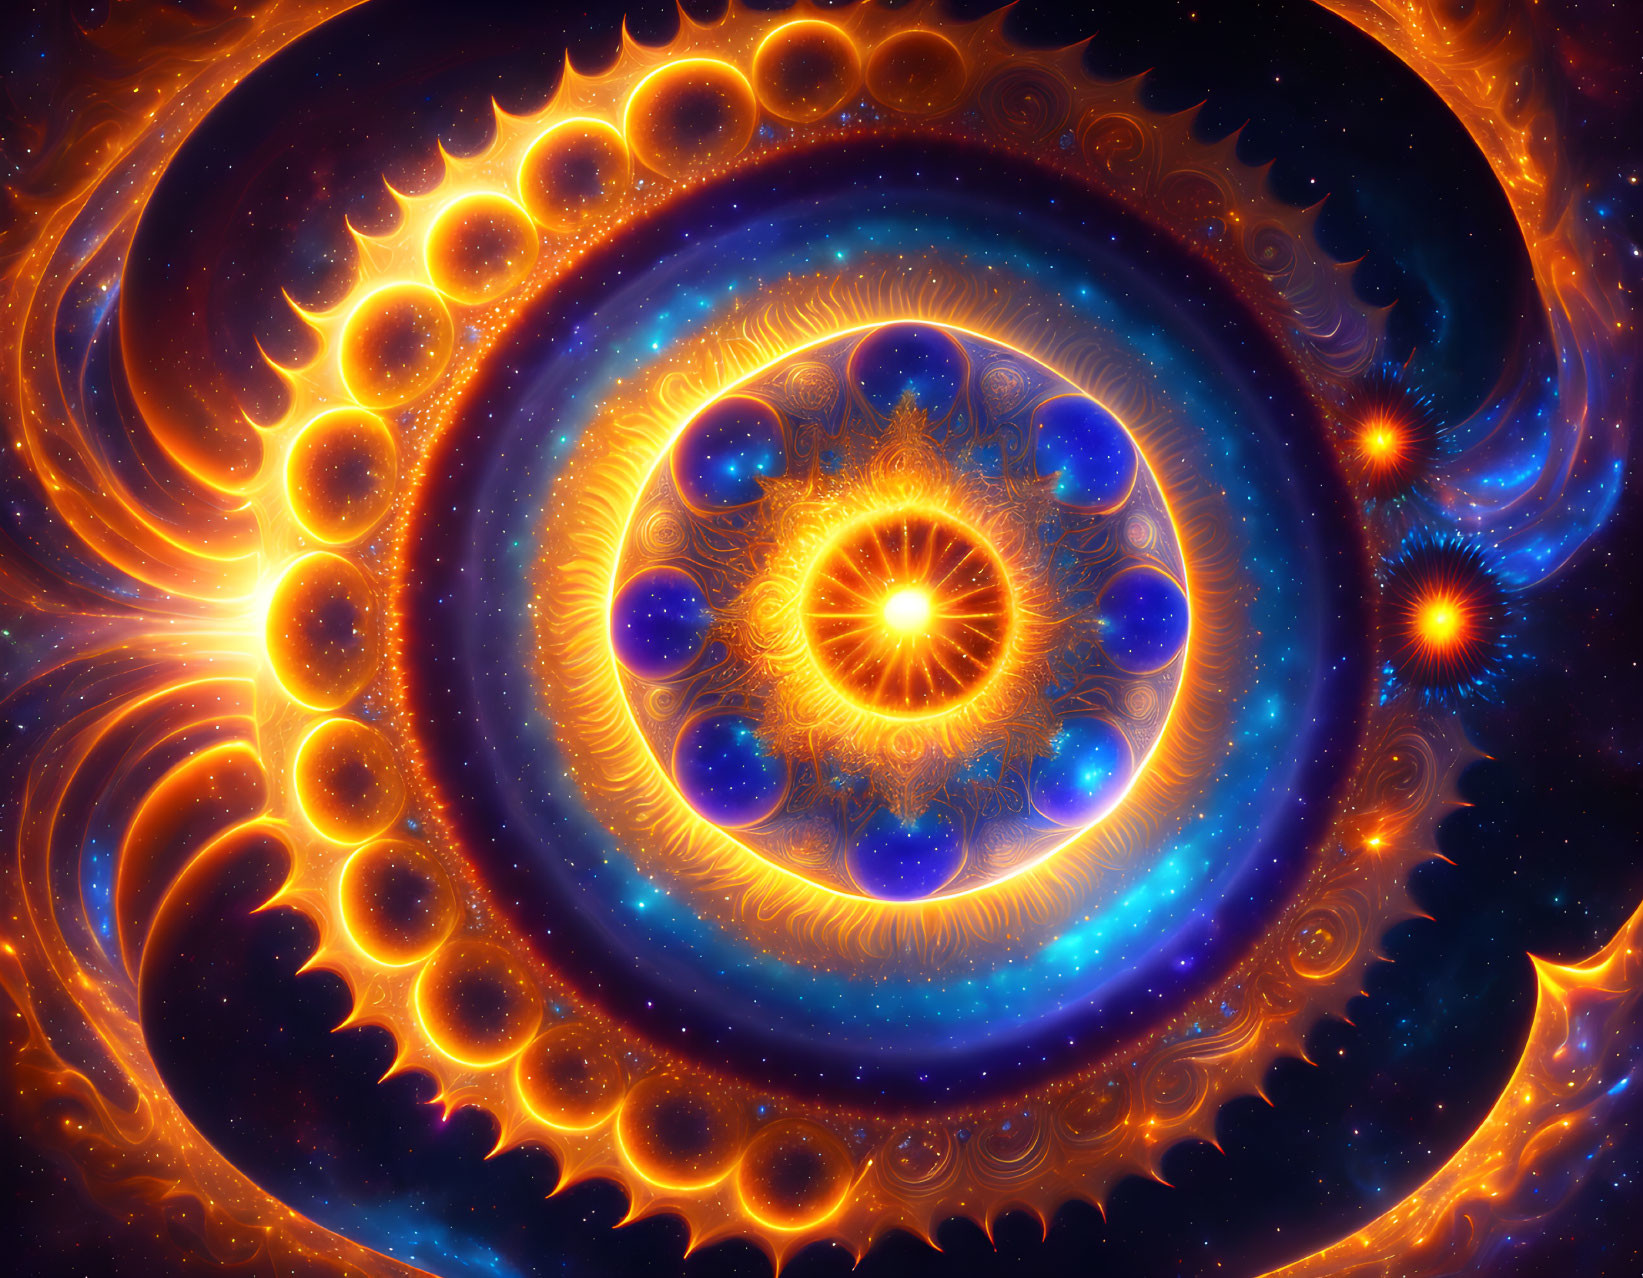 Colorful Fractal Image: Orange and Blue Swirling Patterns